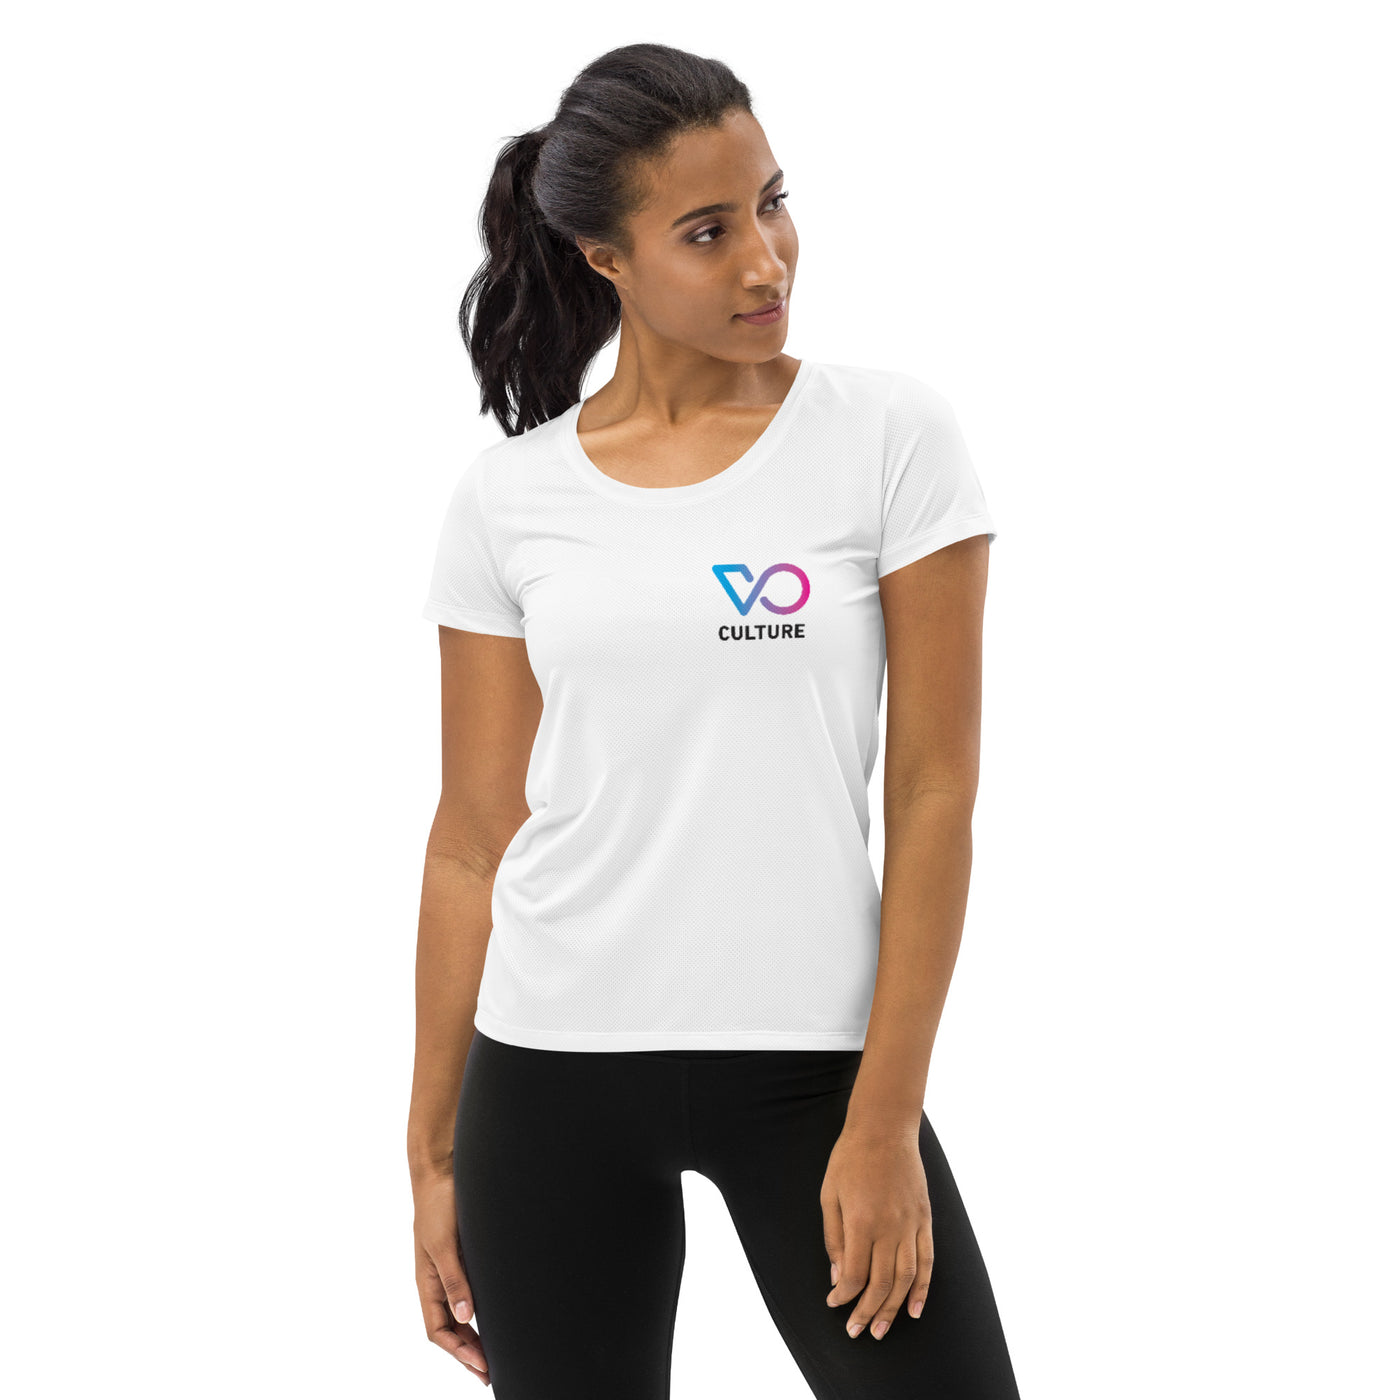 SPEAK YOUR TRUTH Women's Athletic T-shirt